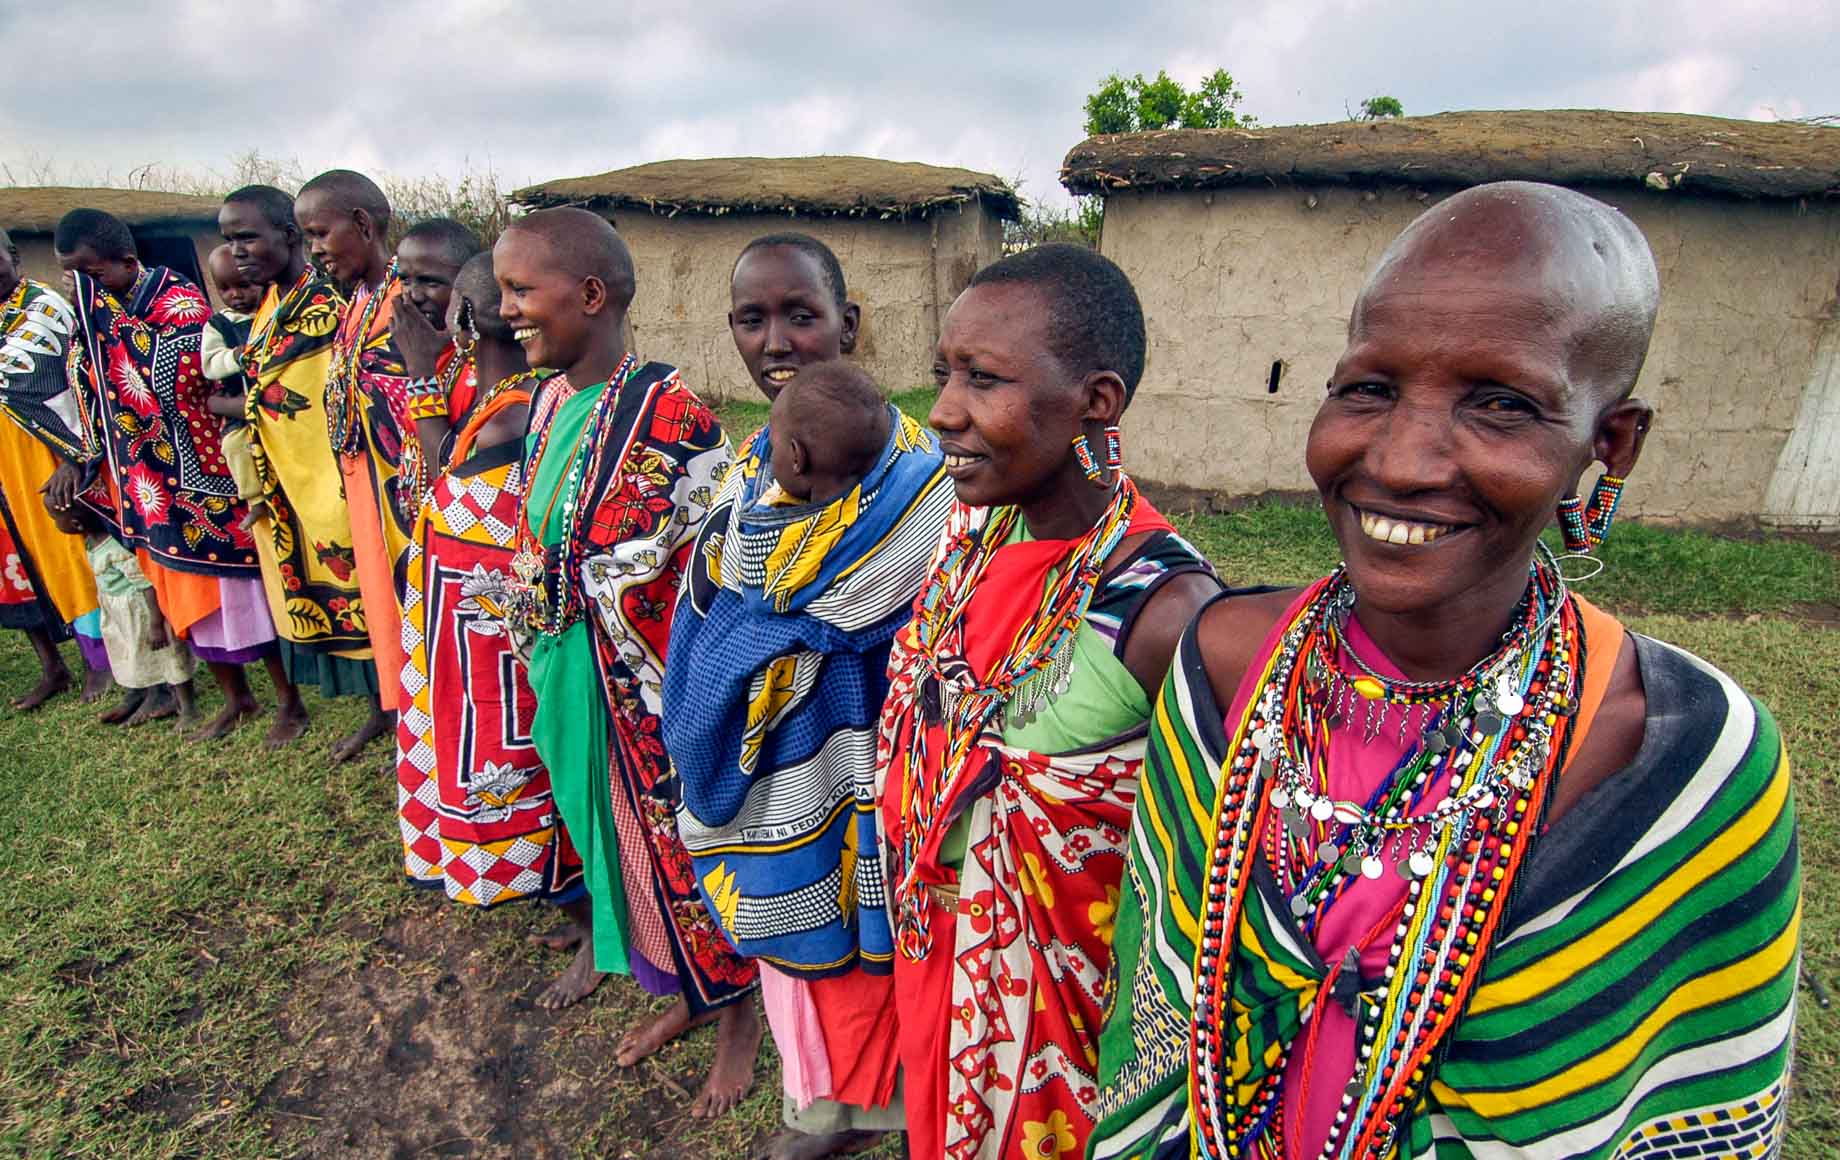 he Masai people roam between the Mara in Kenya and the Serengeti in Tanzania